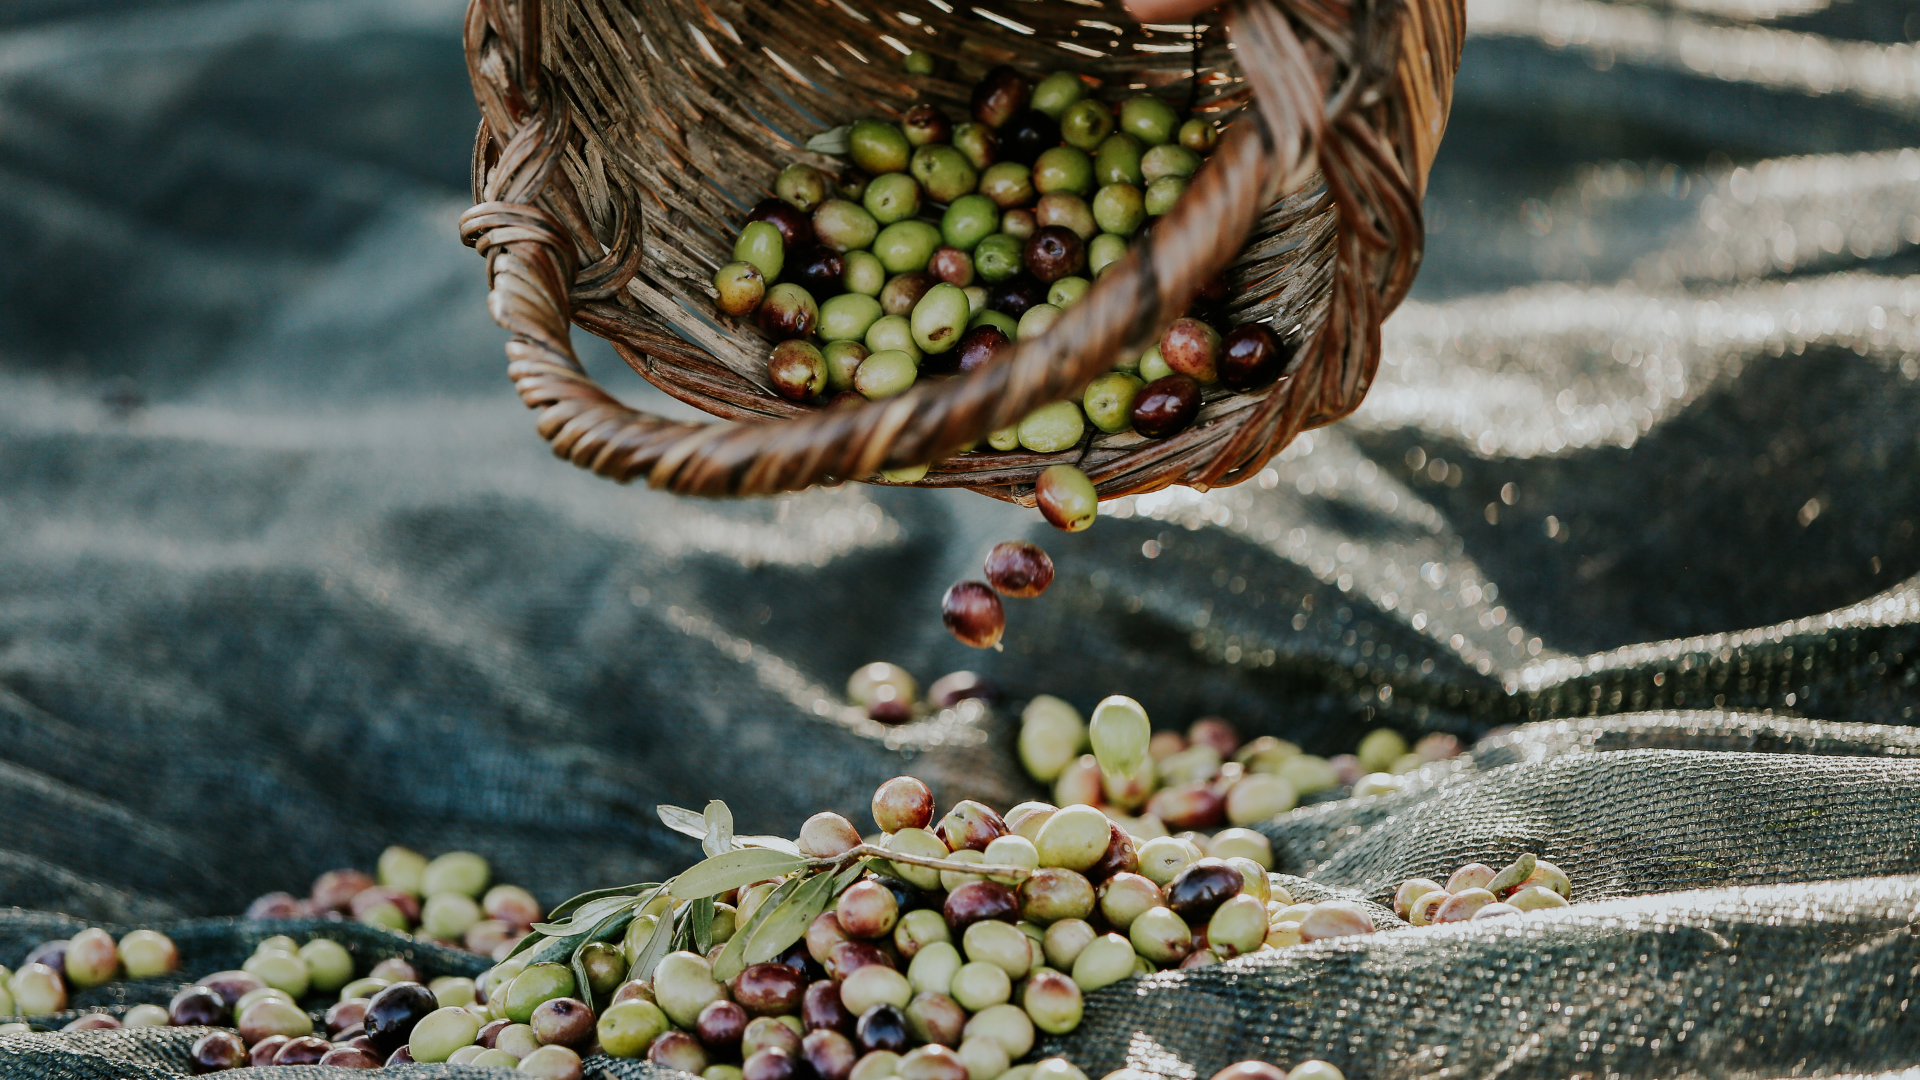 Olive harvest season in Crete